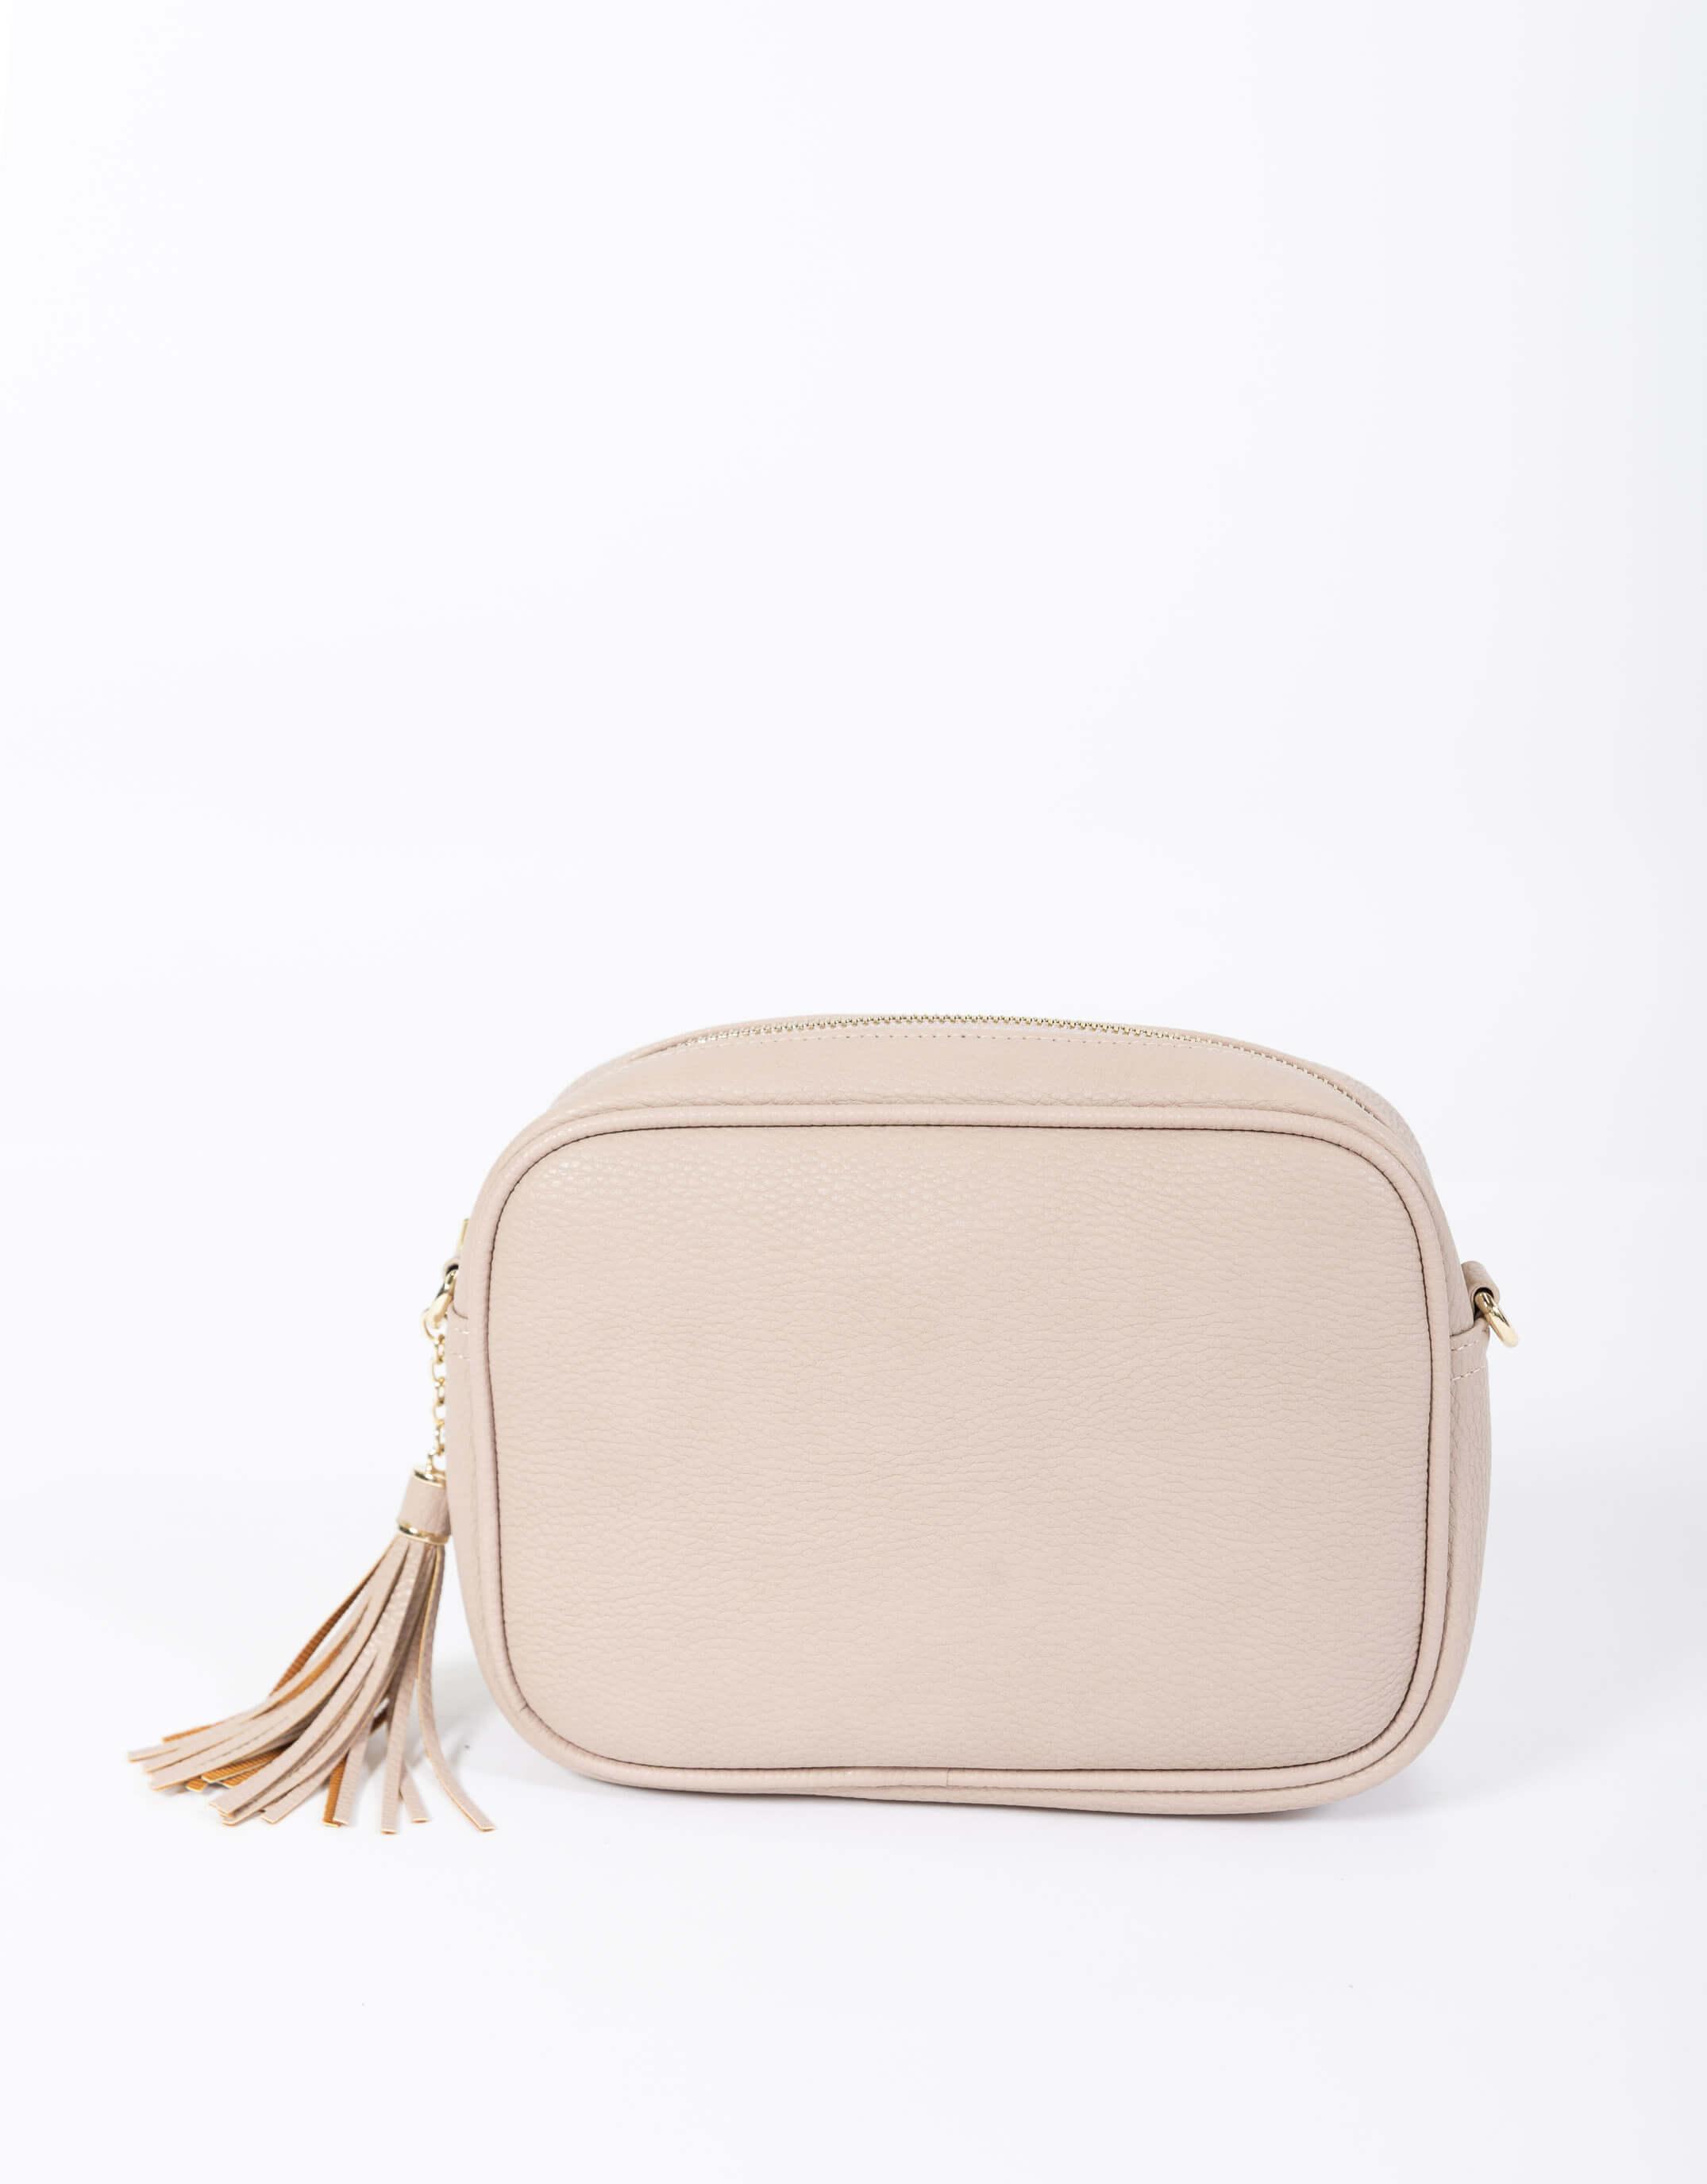 White & Co. - Zoe Crossbody Bag - Pink/Blue Stripe - White & Co Living Accessories